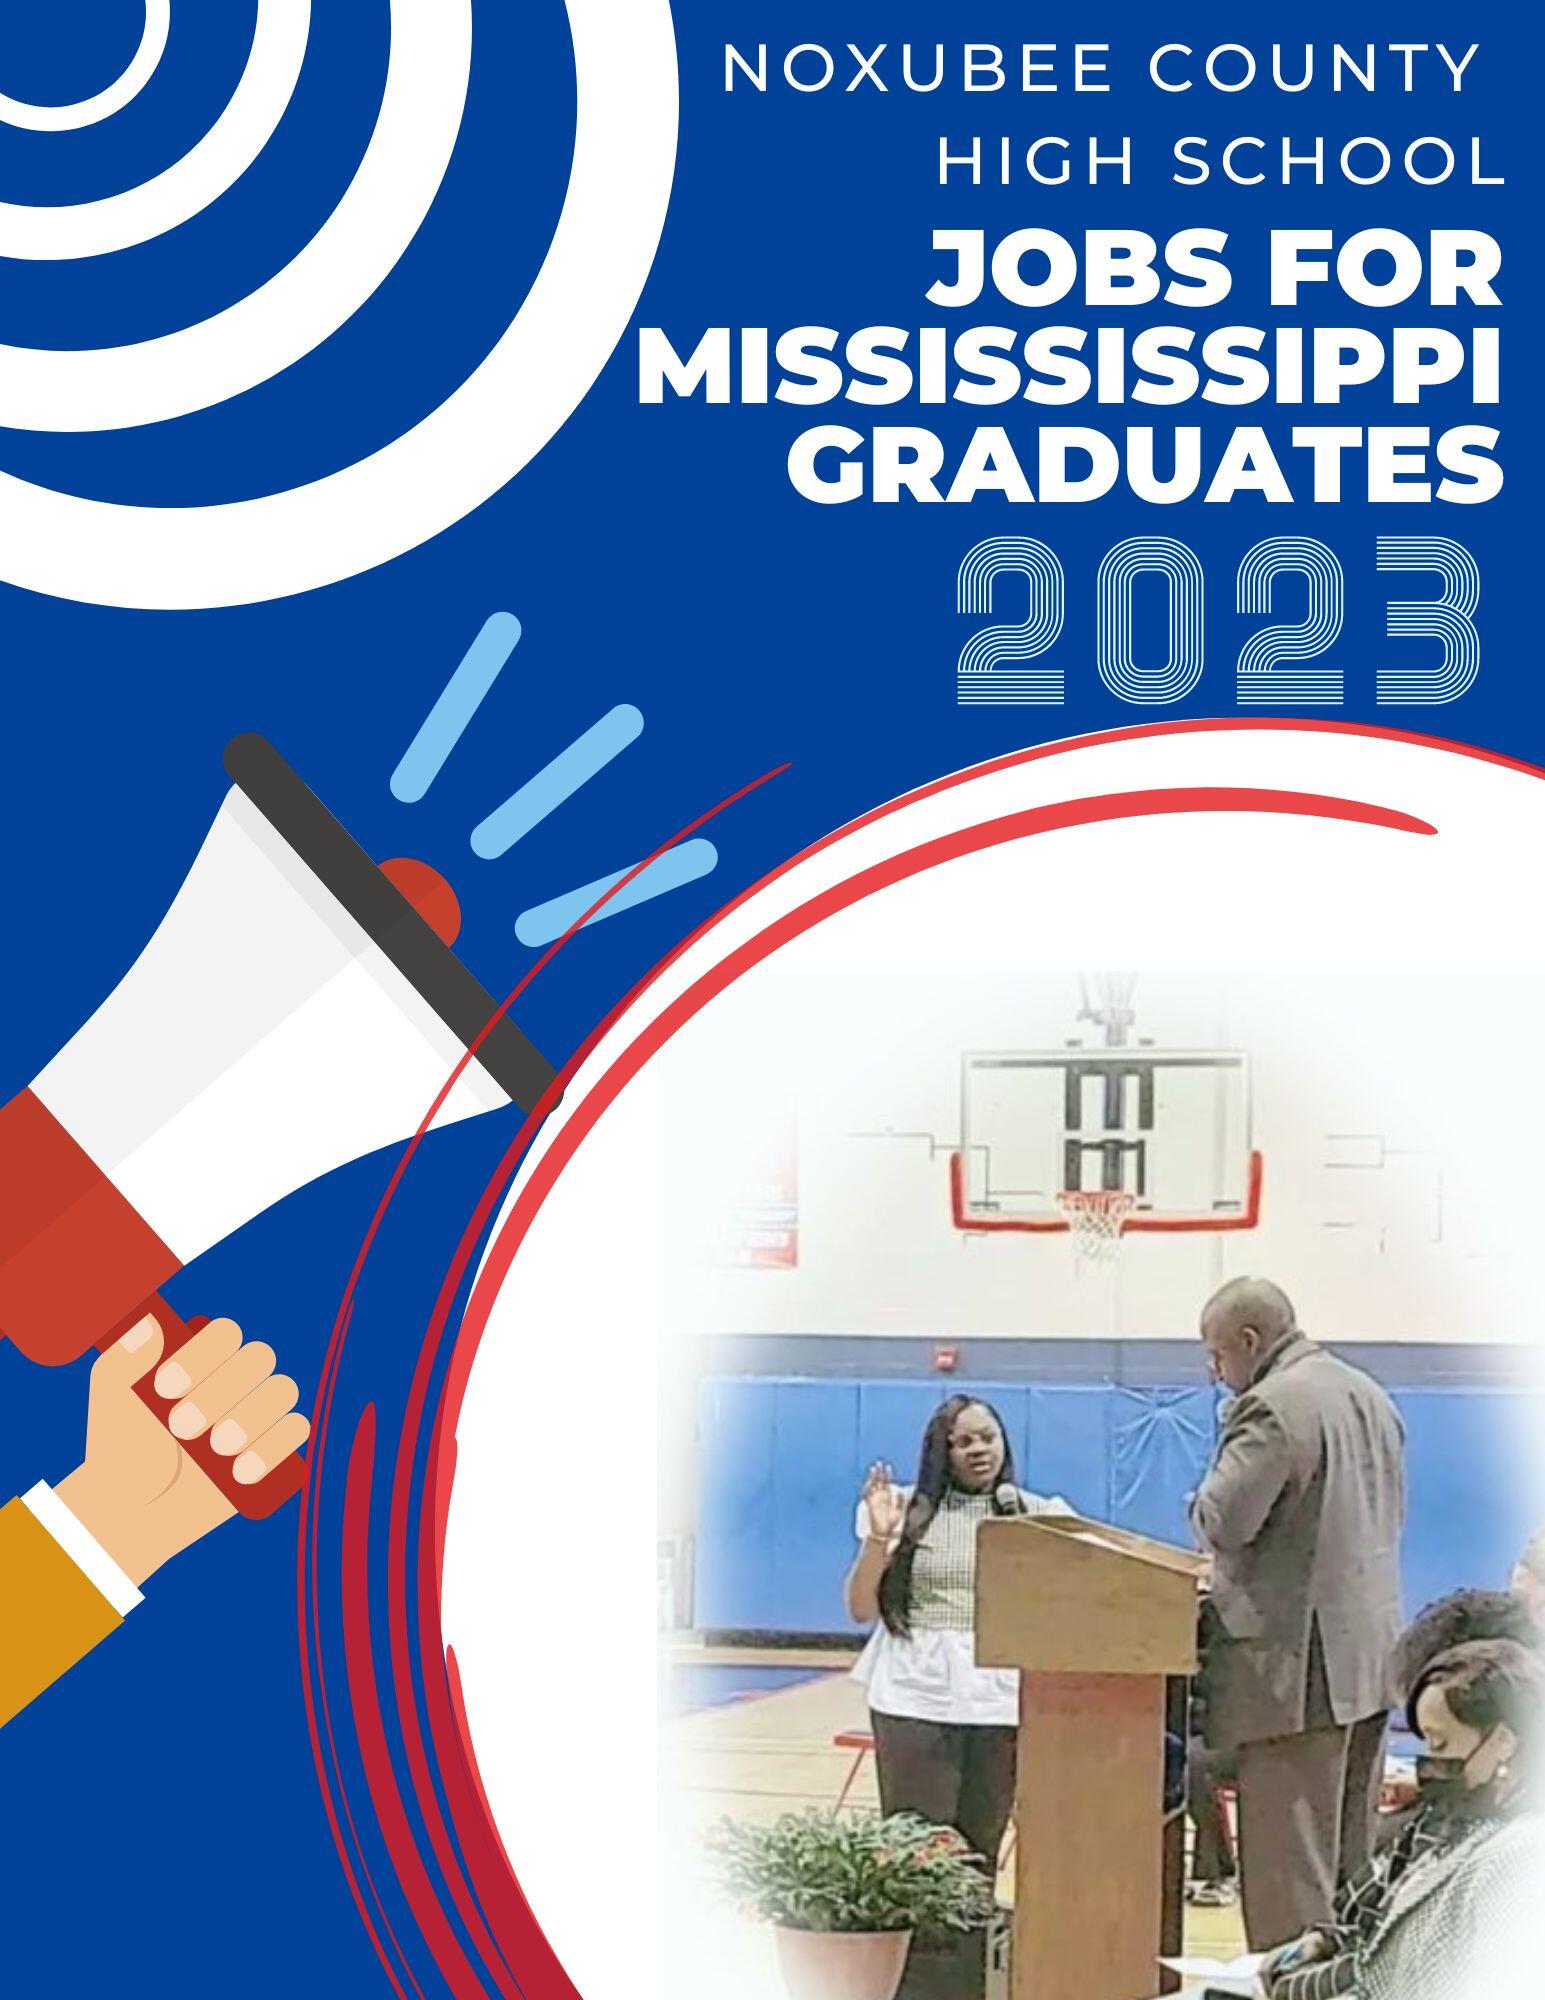 Jobs for Mississippi Graduates